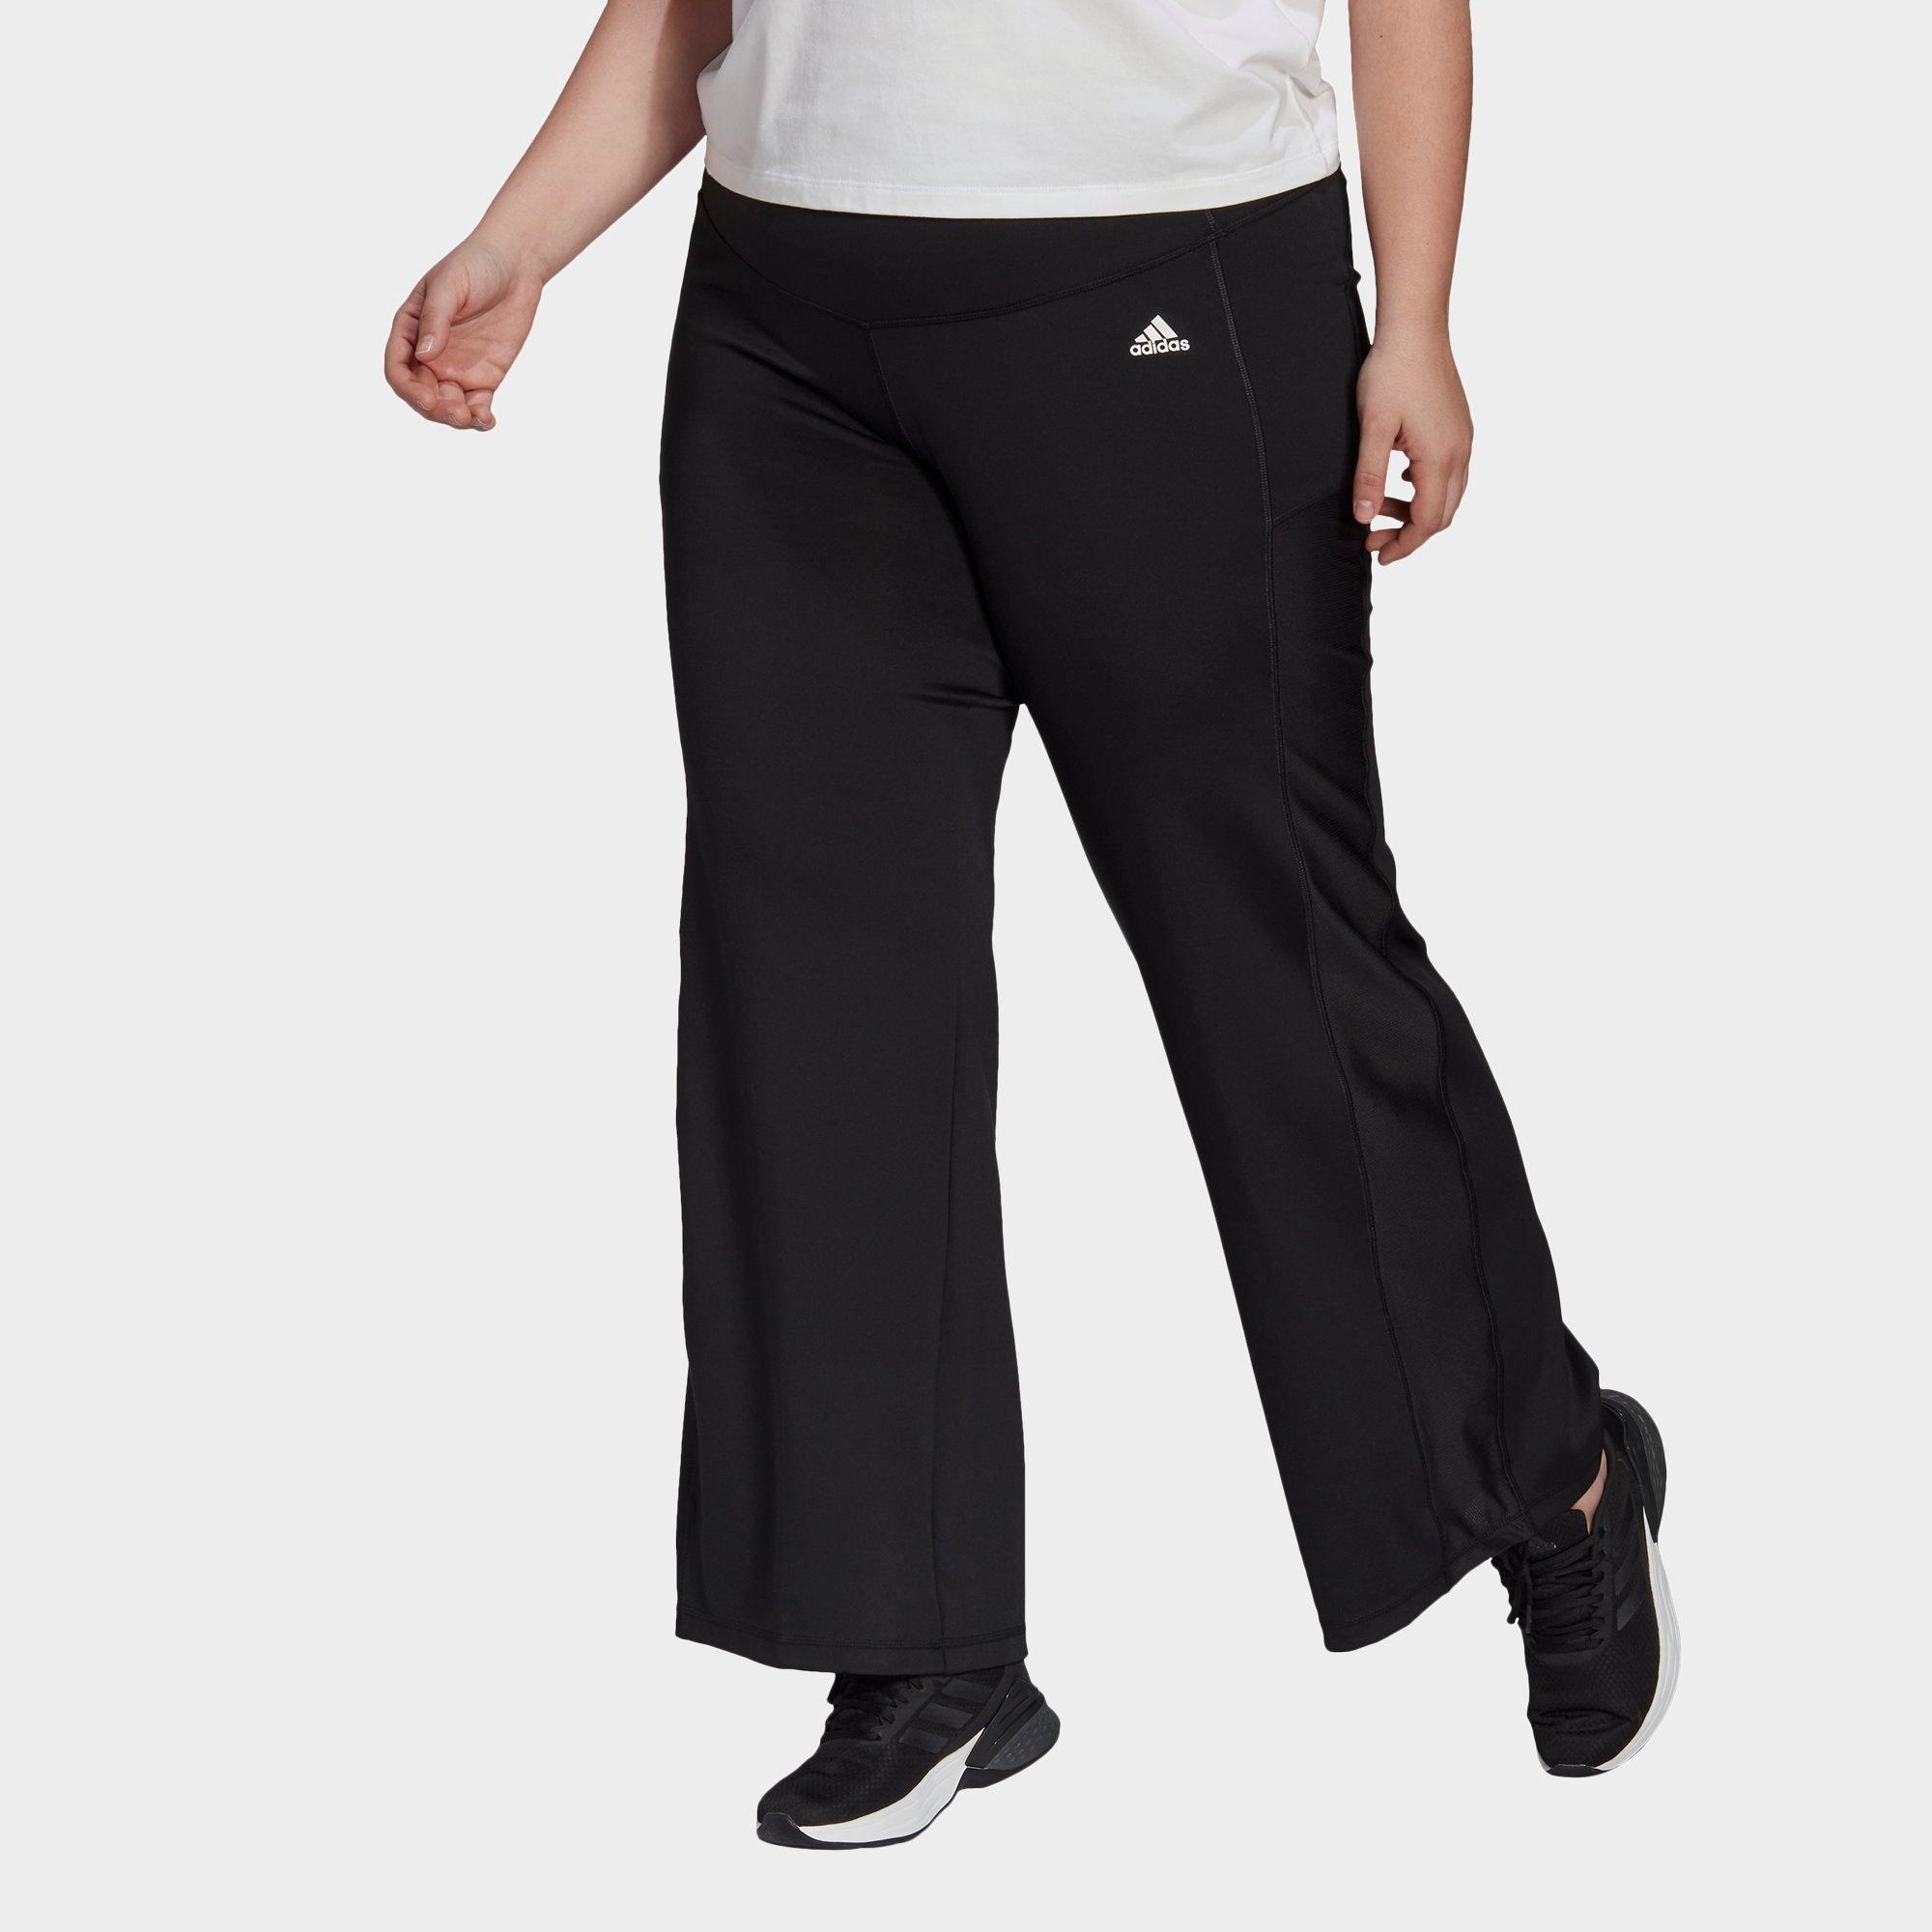 women's adidas designed 2 move jogger pants